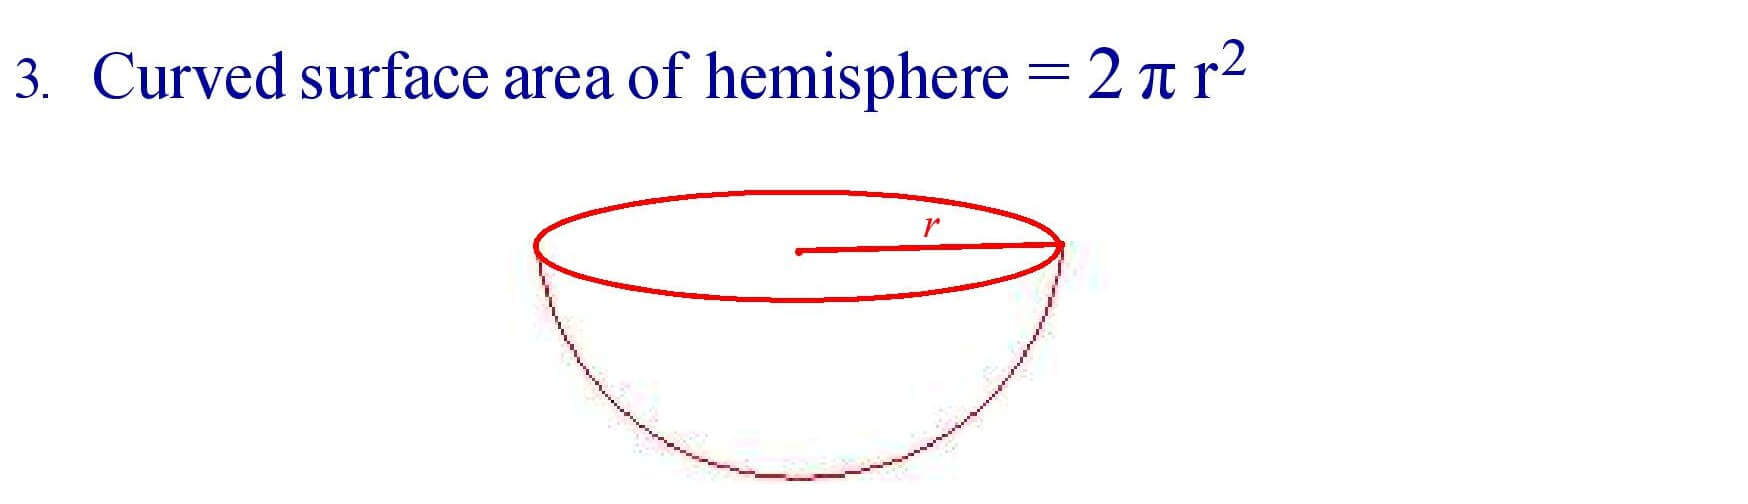 Curved surface area of hemisphere